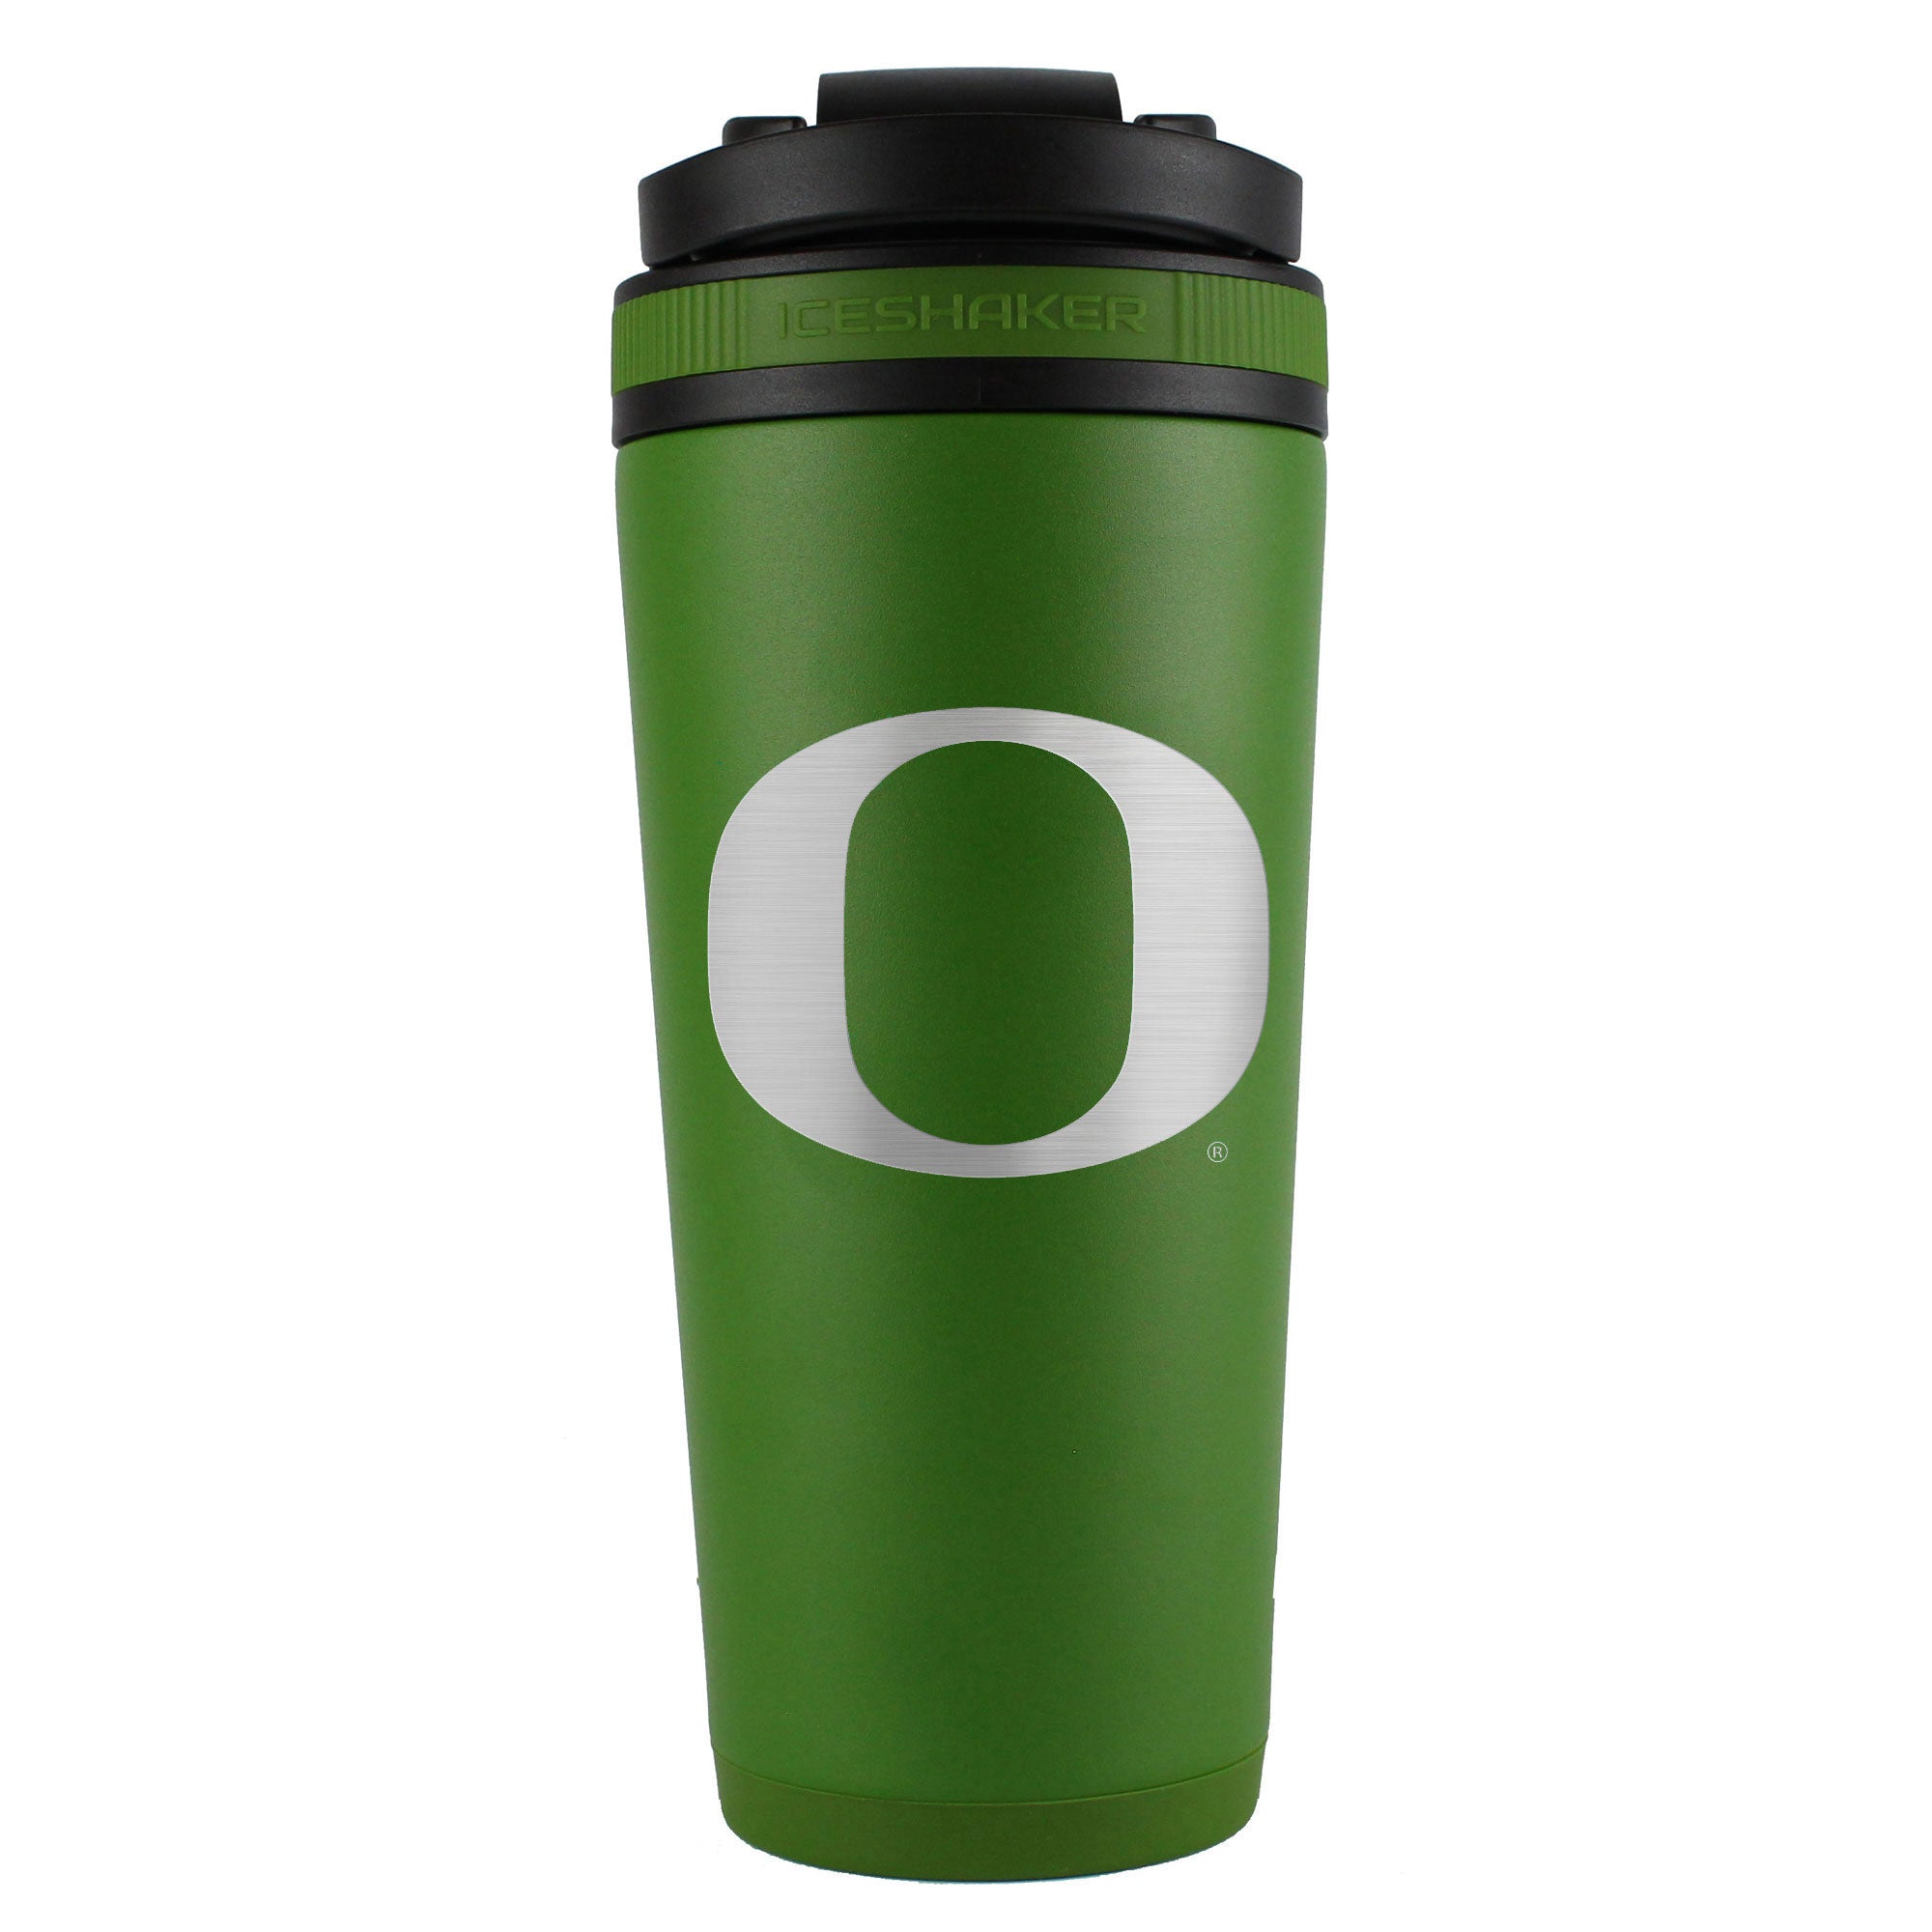 Officially Licensed University of Oregon 26oz Ice Shaker - Green